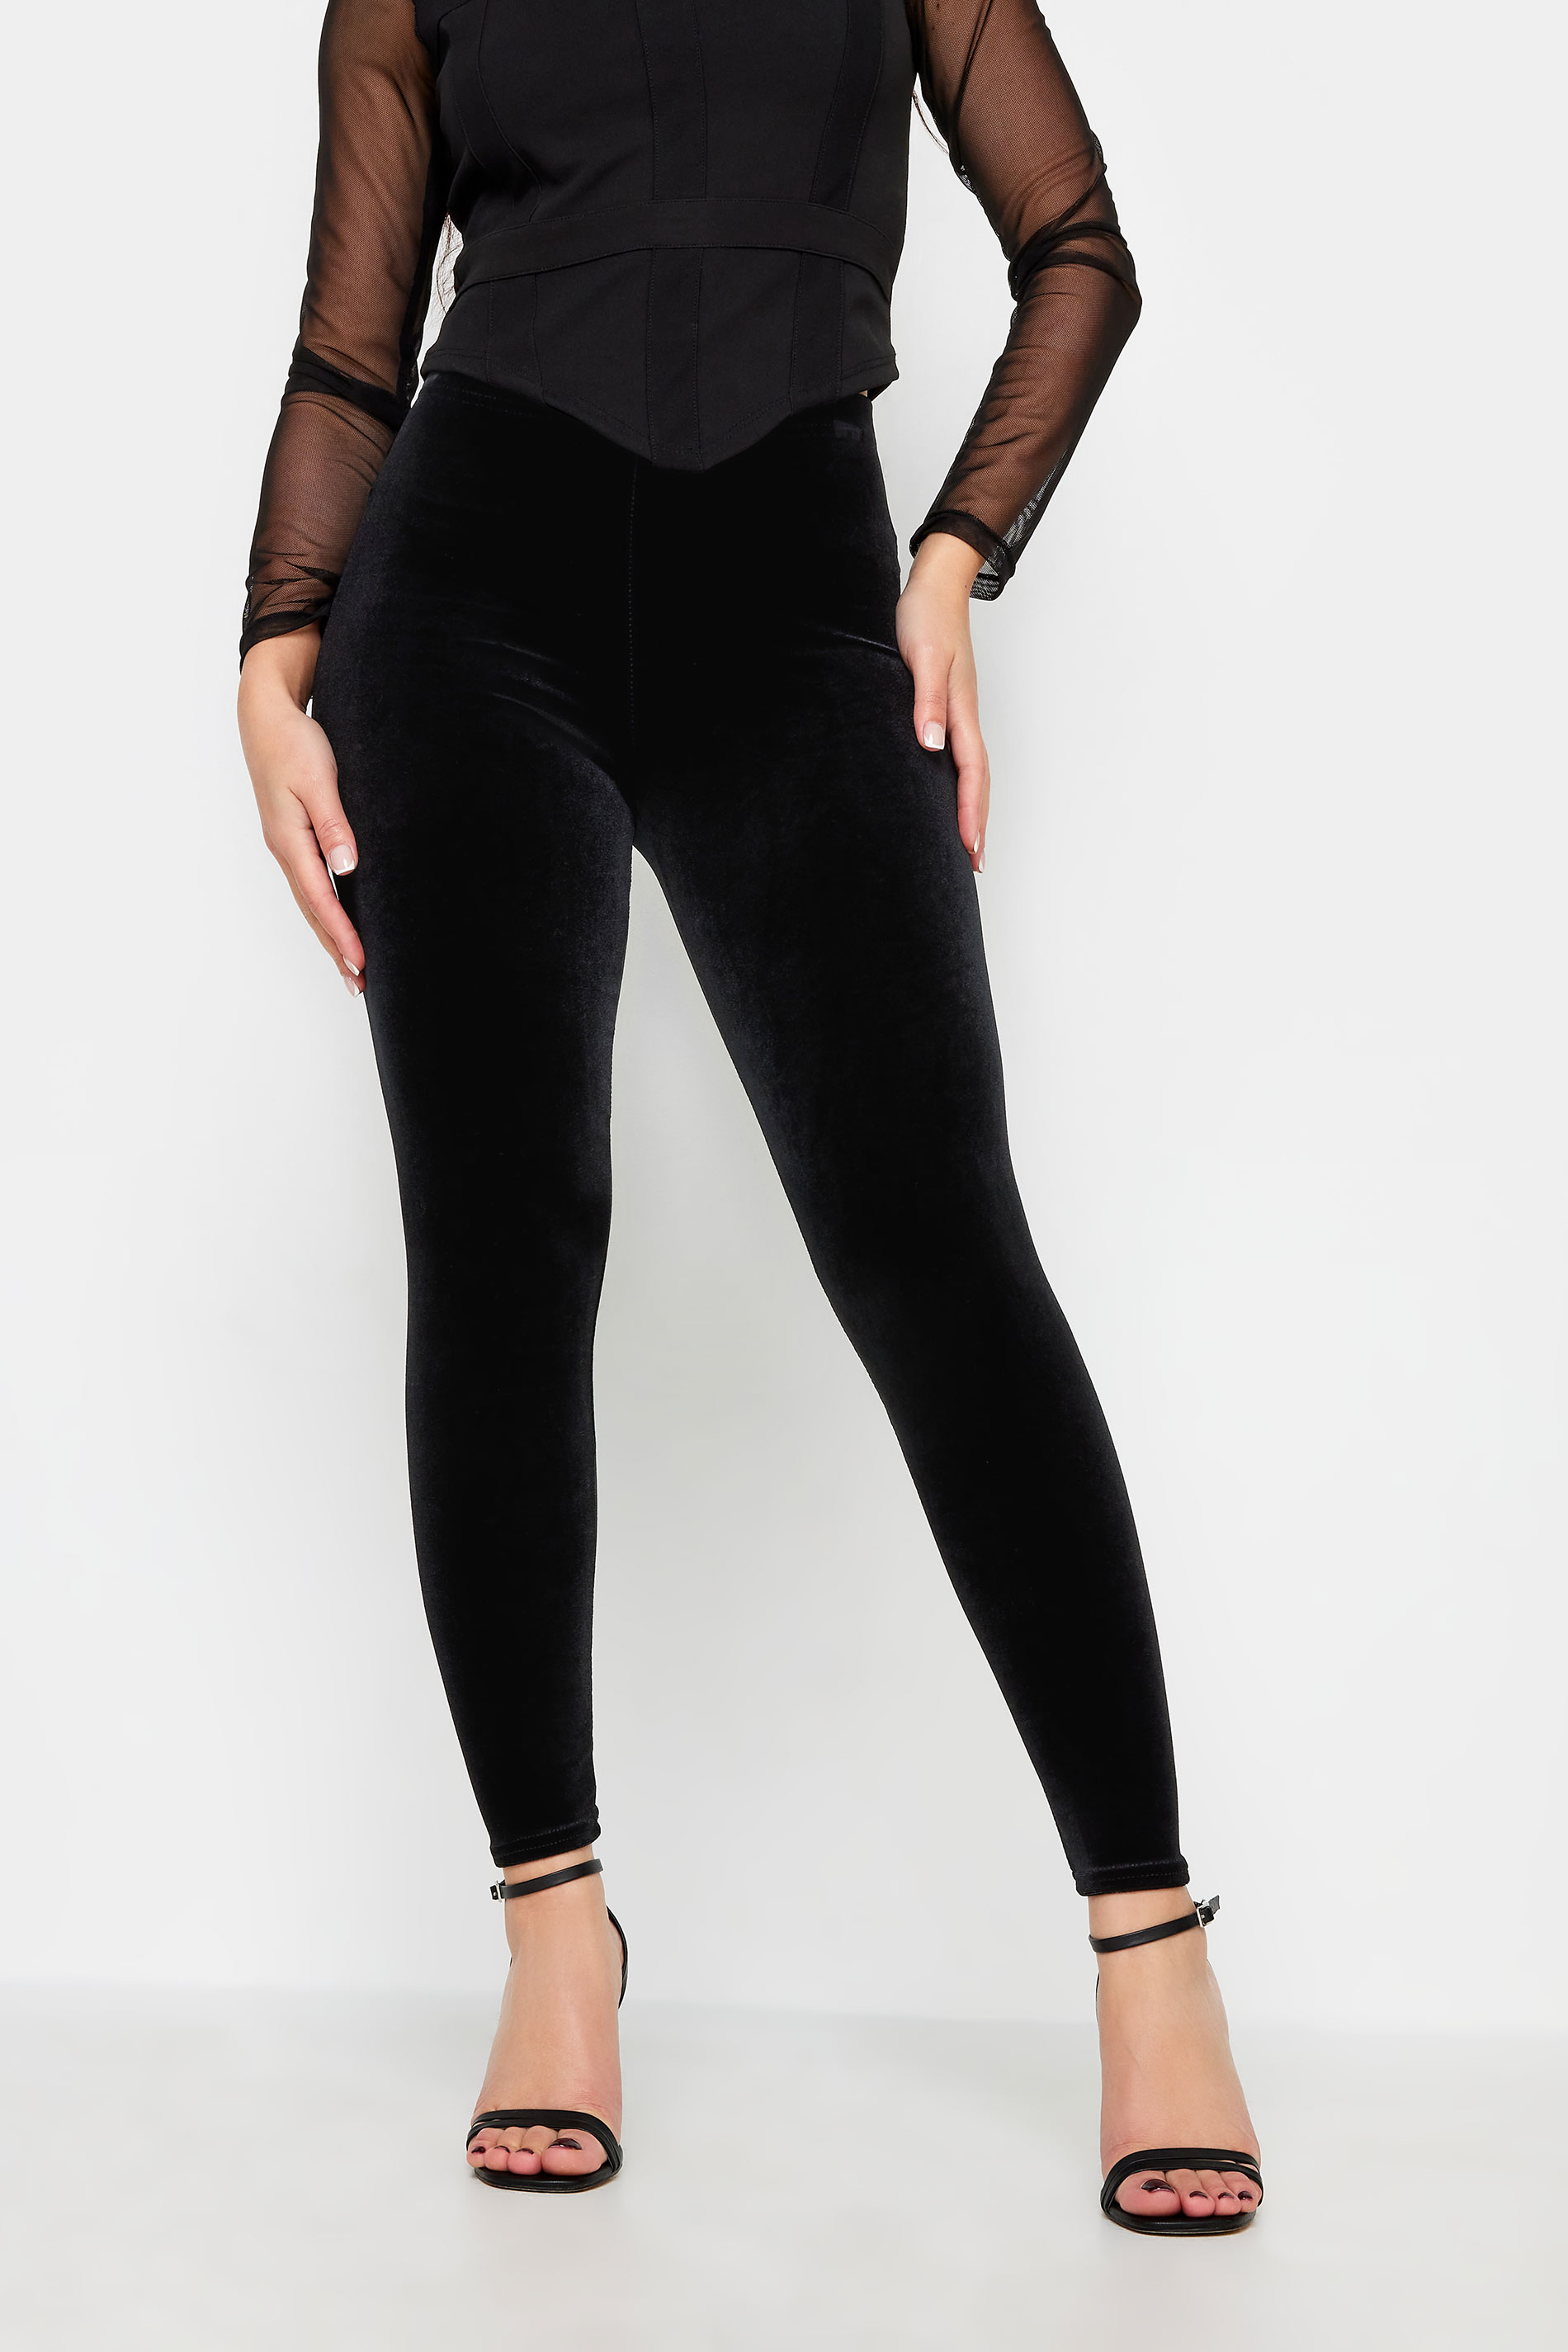 Velvet elastic leggings curvy in dark grey, 8.99€ | Celestino